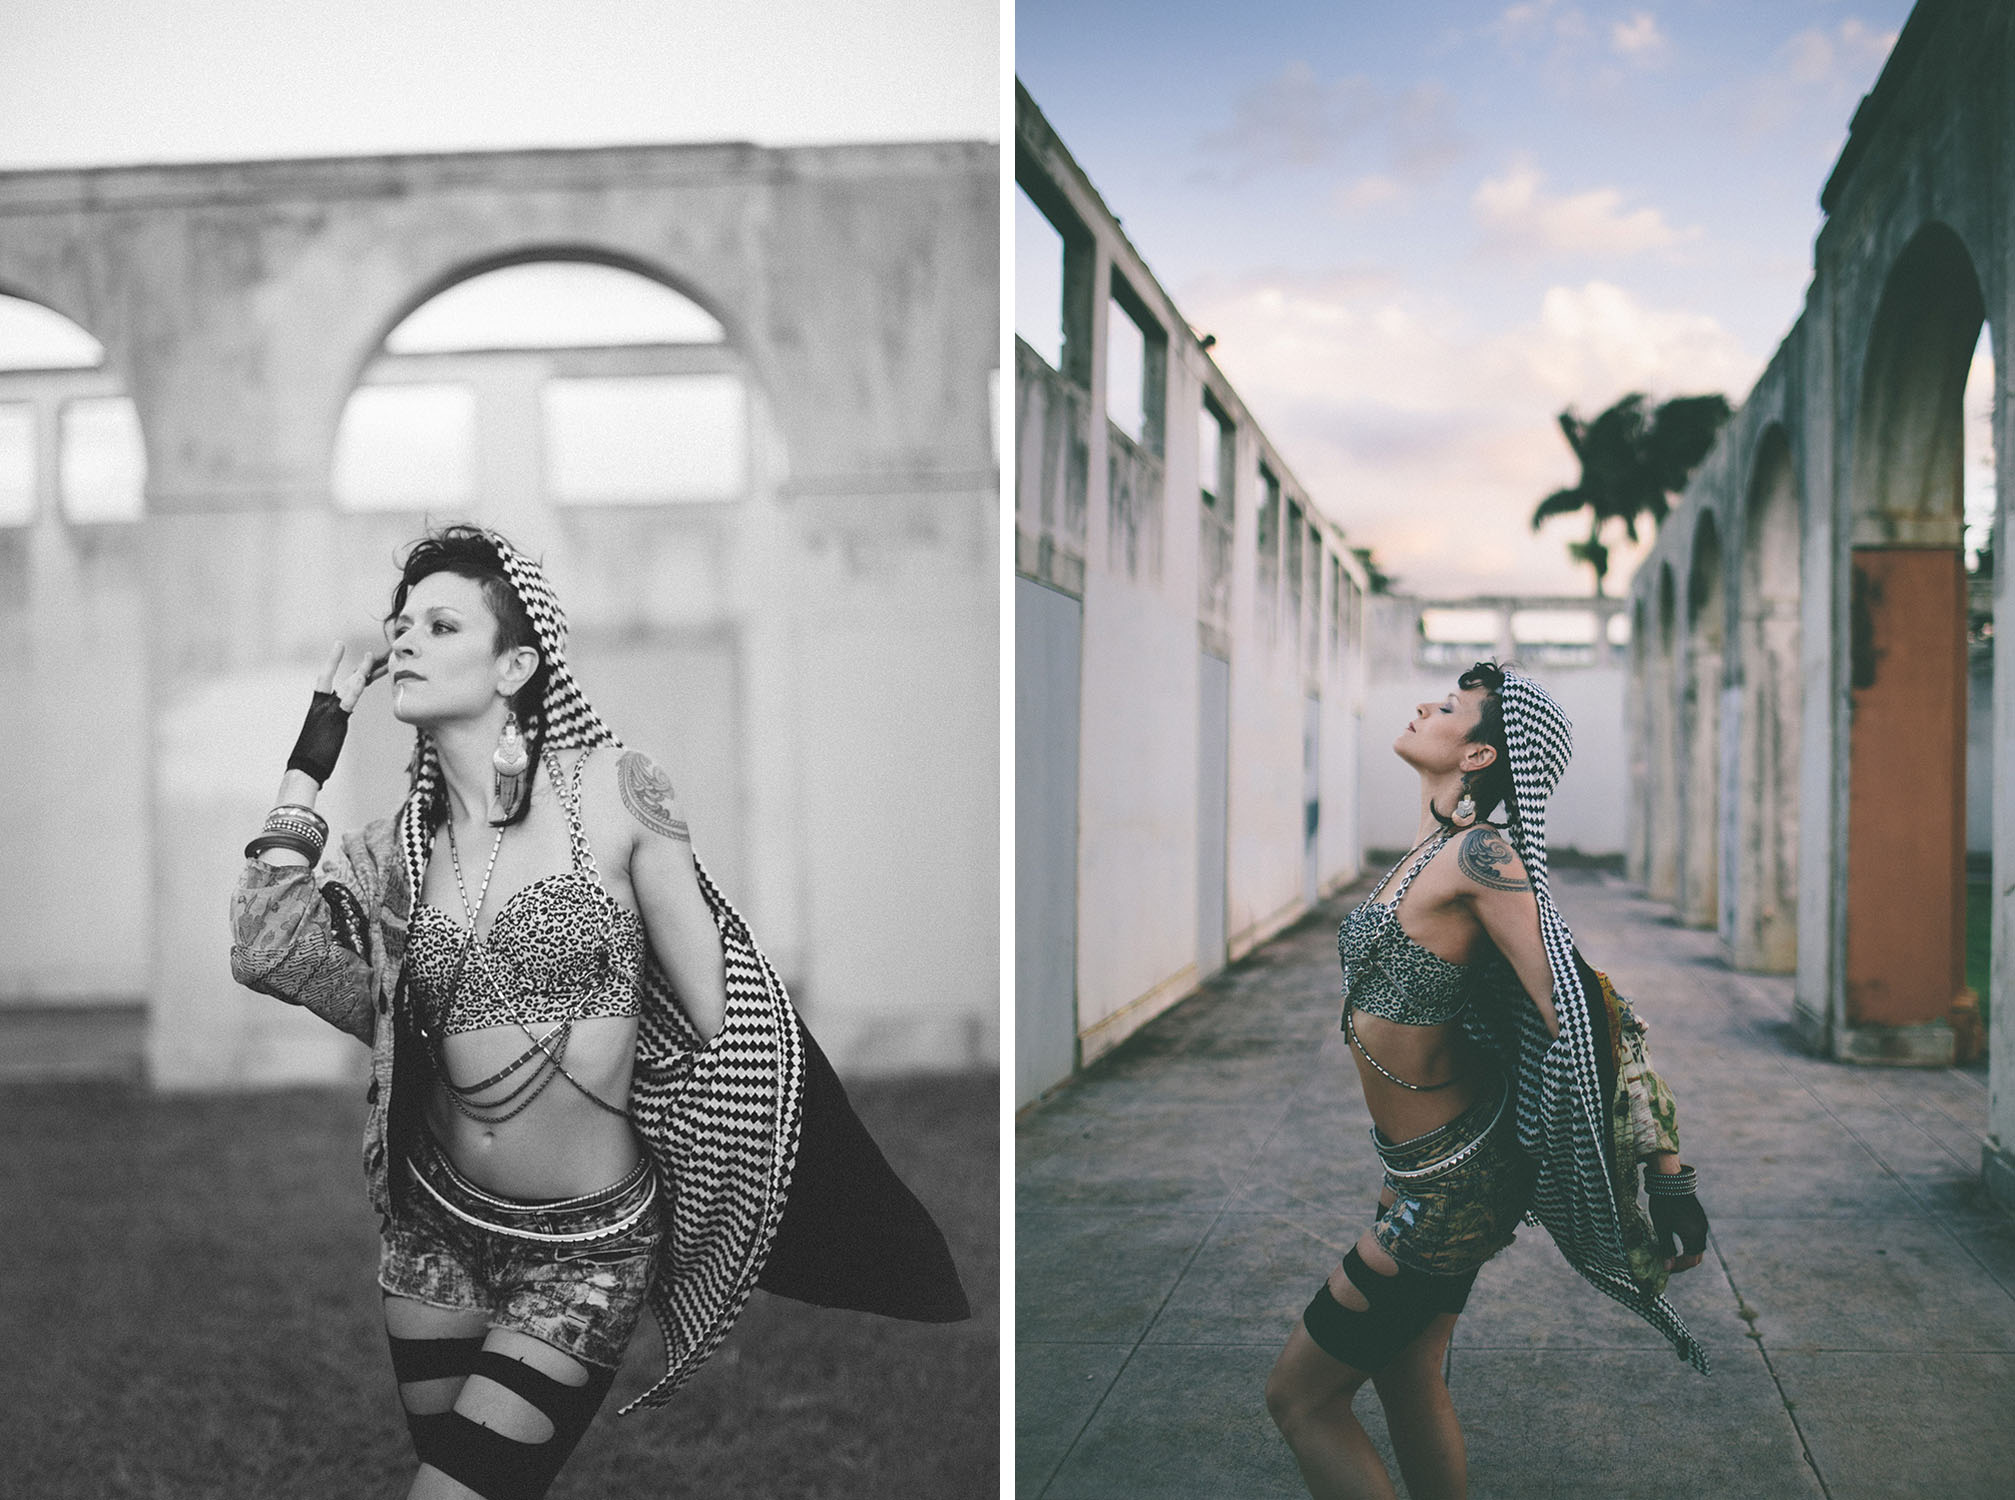 cadencia photography, lifestyle photographer based on Maui. 